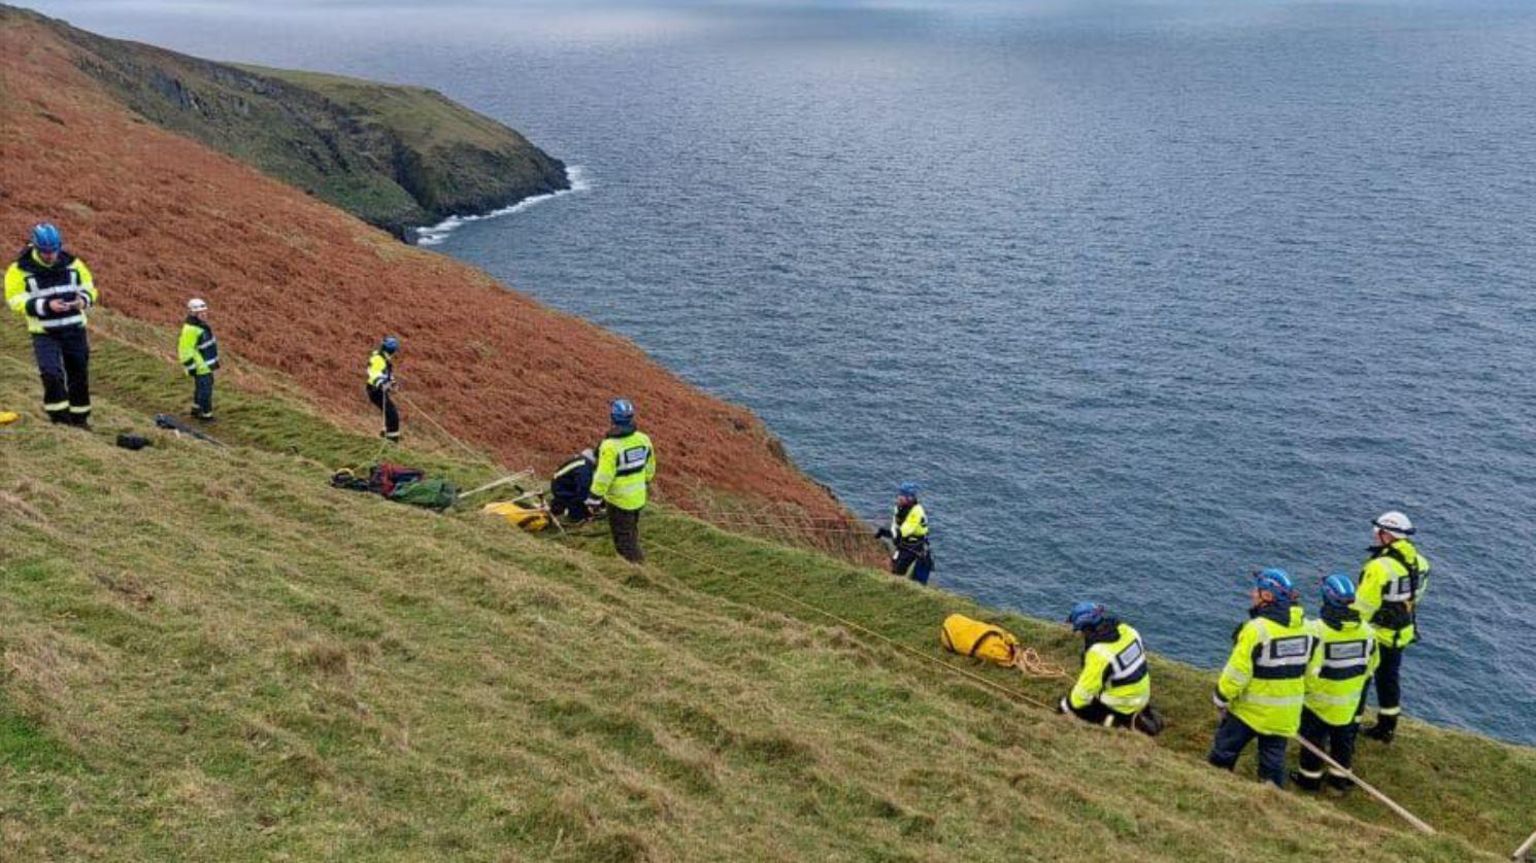 A coastguard team organising a rope rescue on the cliff edge